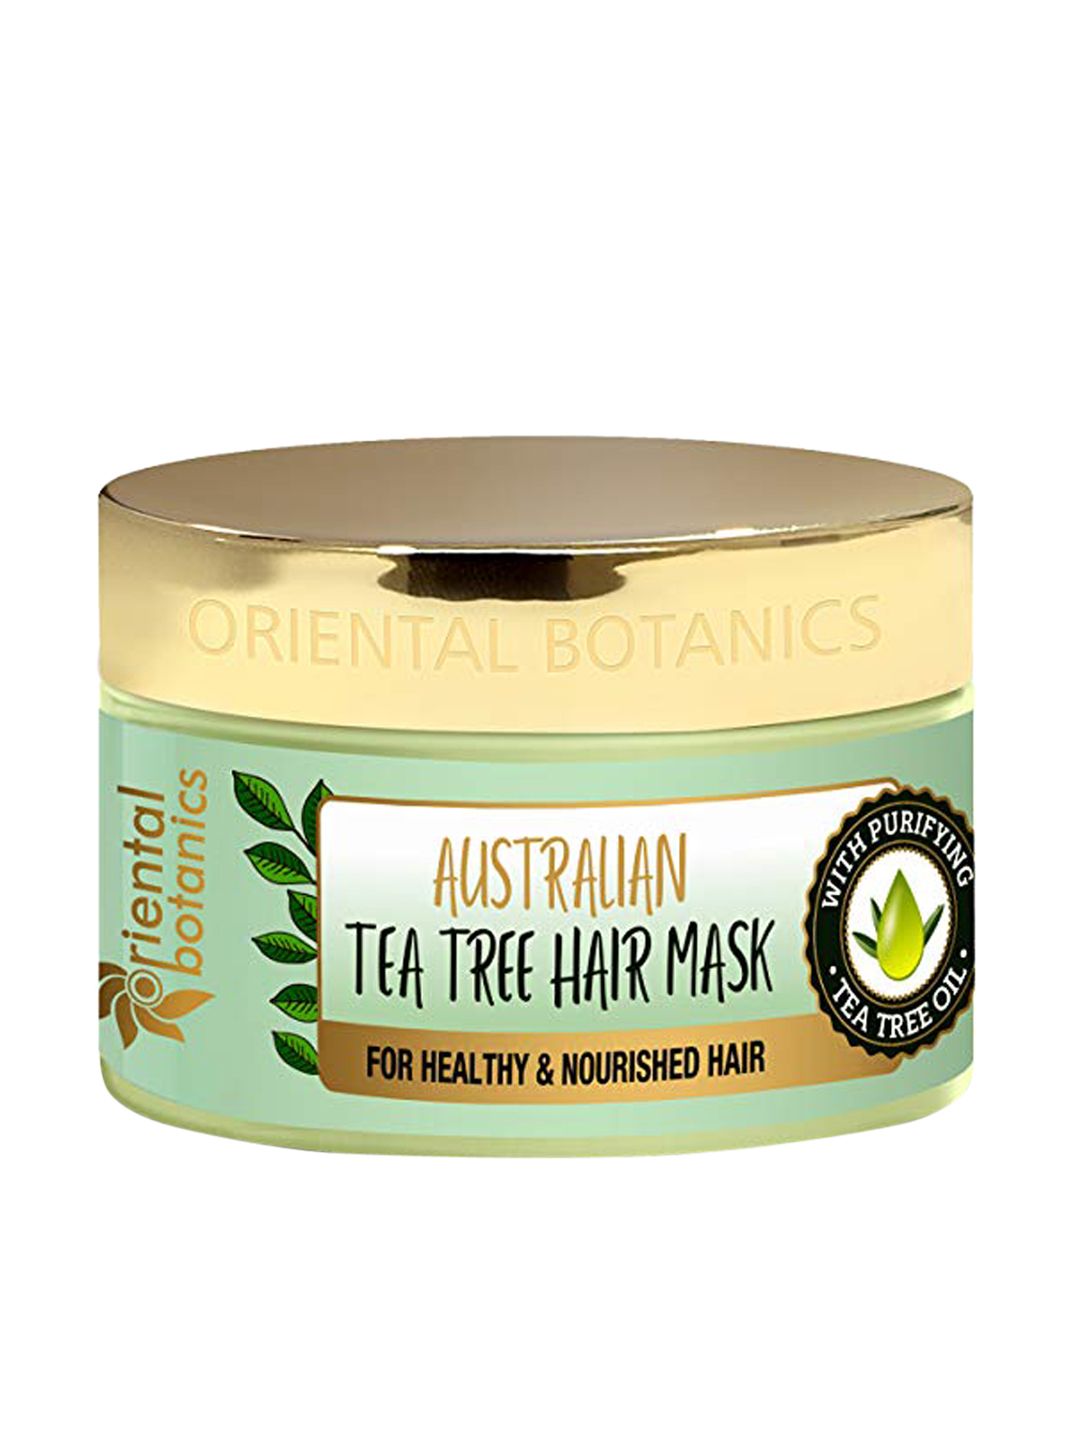 Oriental Botanics Australian Tea Tree Hair Mask 200ml Price in India